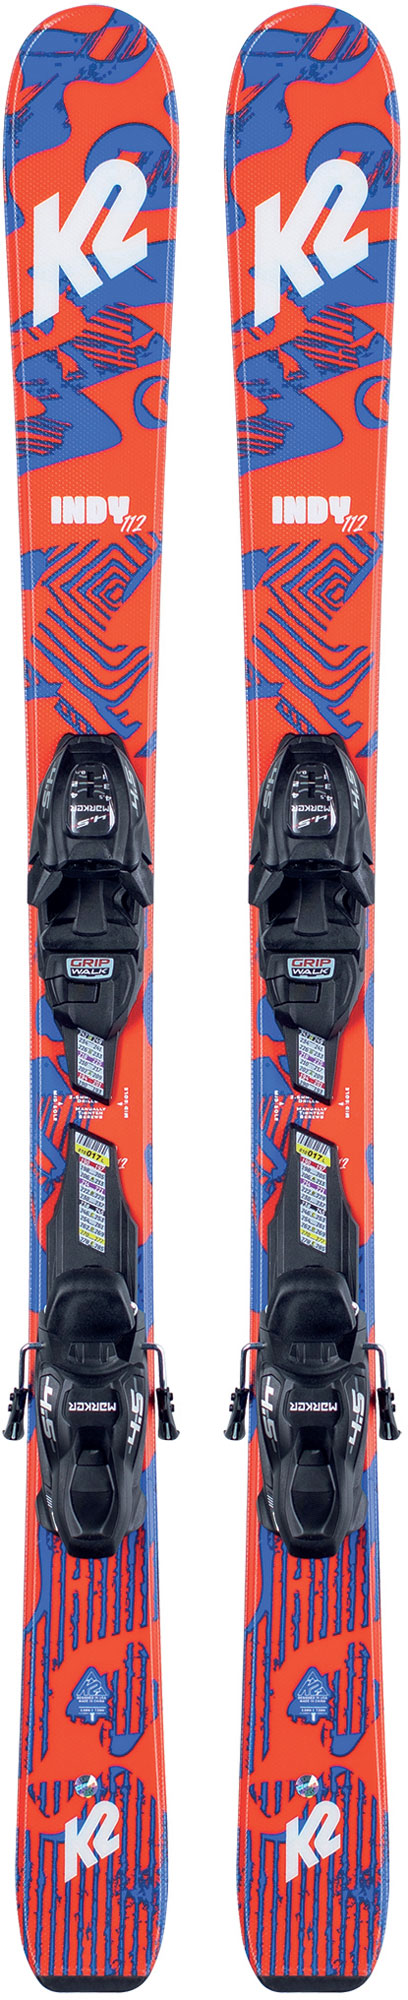 Kids’ allmountain skis with binding